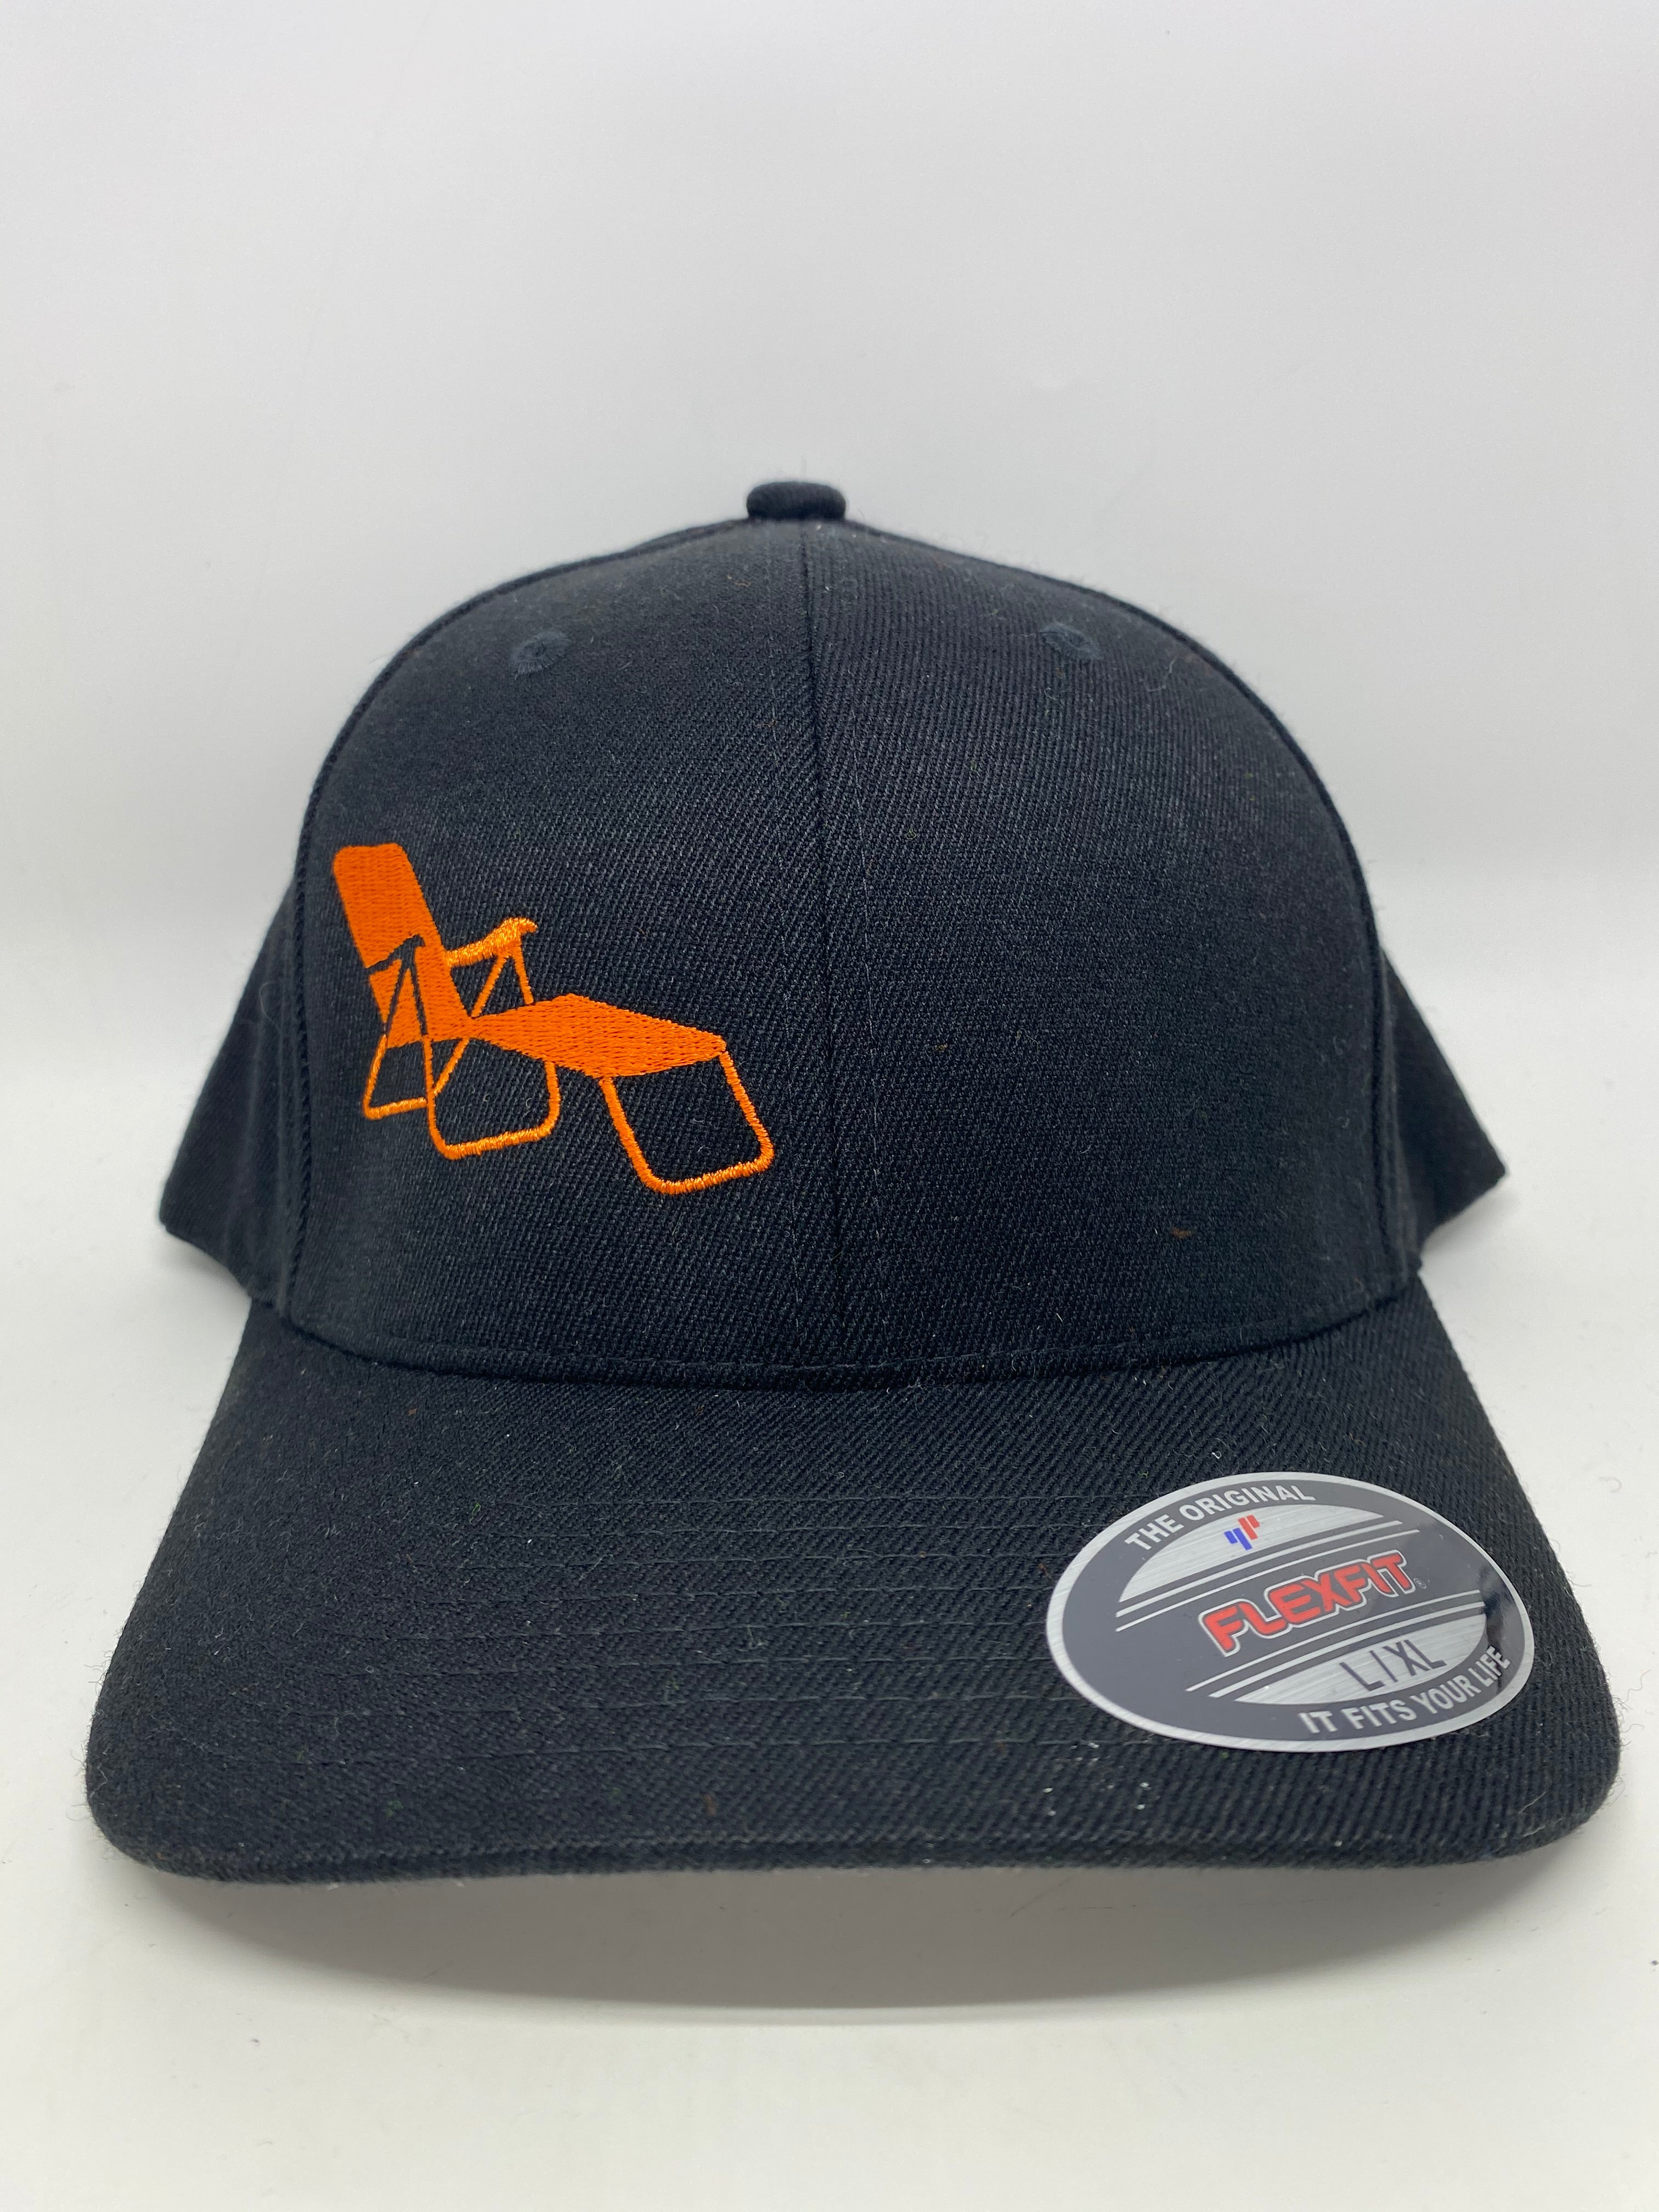 rideSFO LoungeChairLife Classic Hat Orange/Black